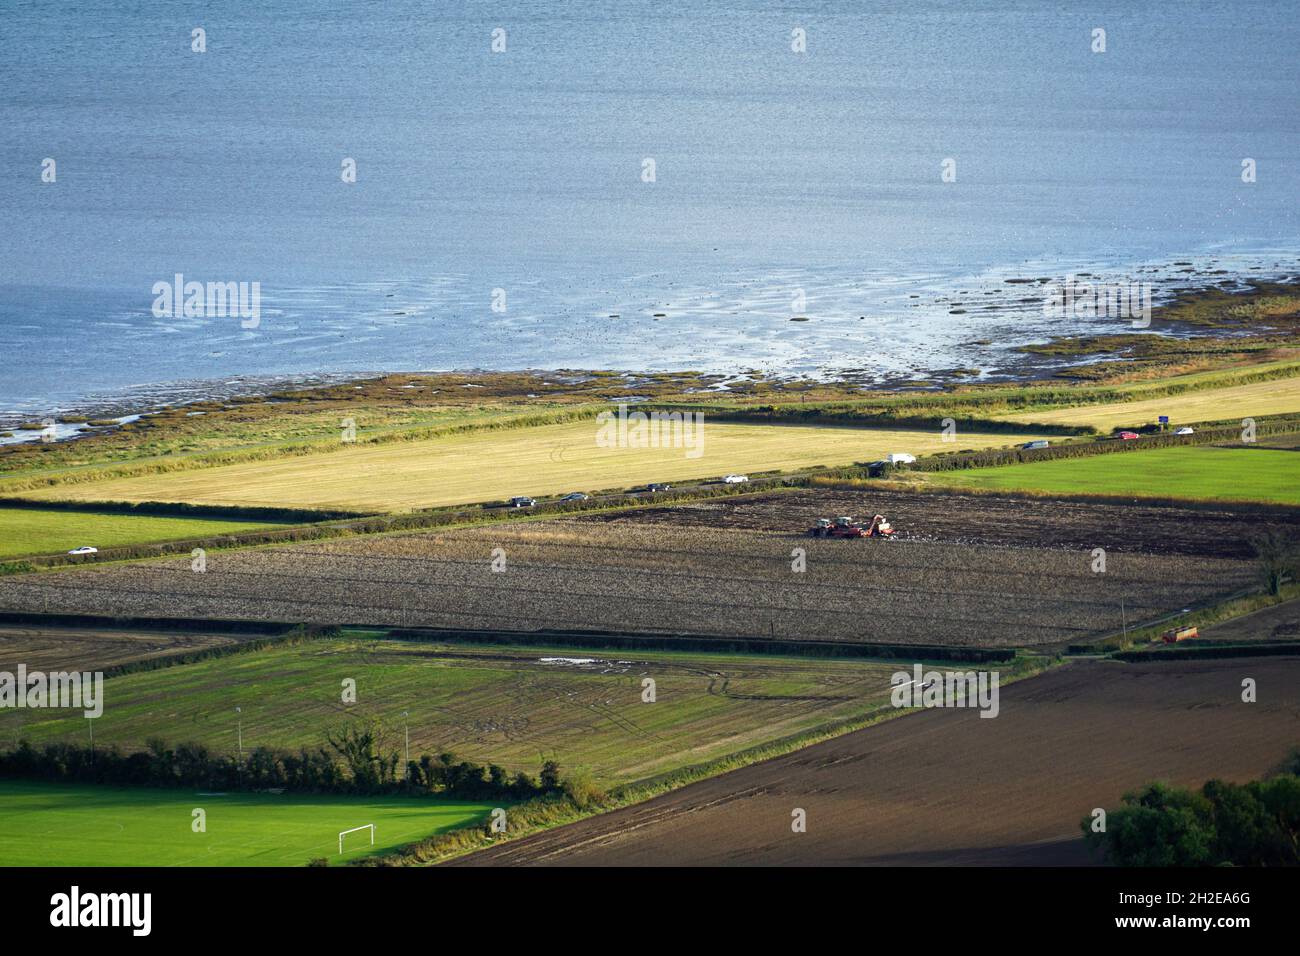 Irish potato harvest. Aerial view of potato fields near Comber in County Down, Northern Ireland. 29.10.2019 Stock Photo